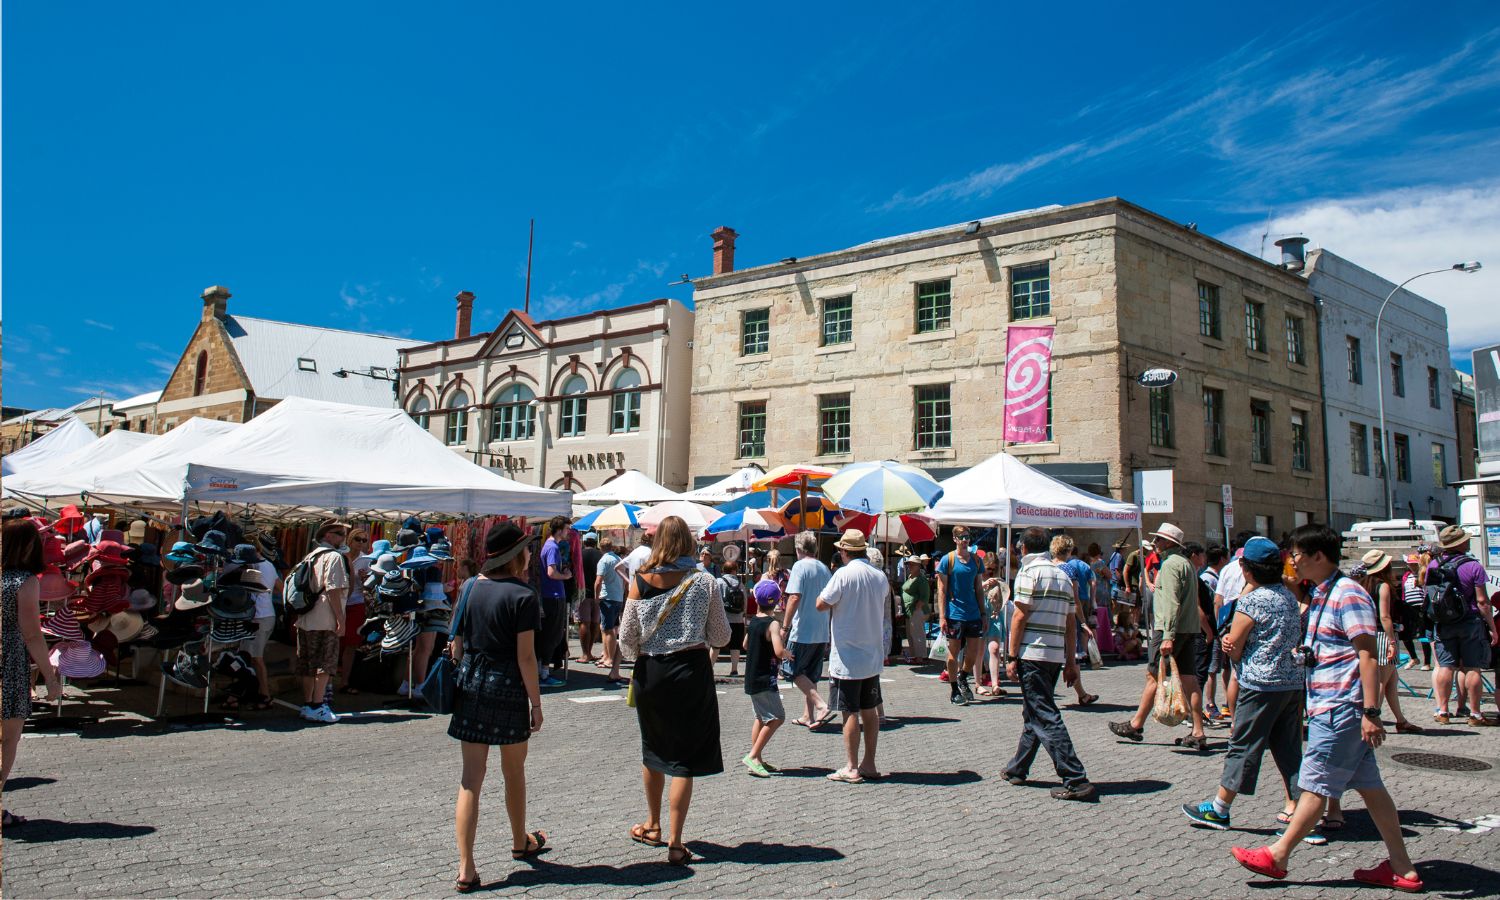 An image of Salamanca Markets in Hobart to illustrate LGBTQIA+ rights in Tasmania